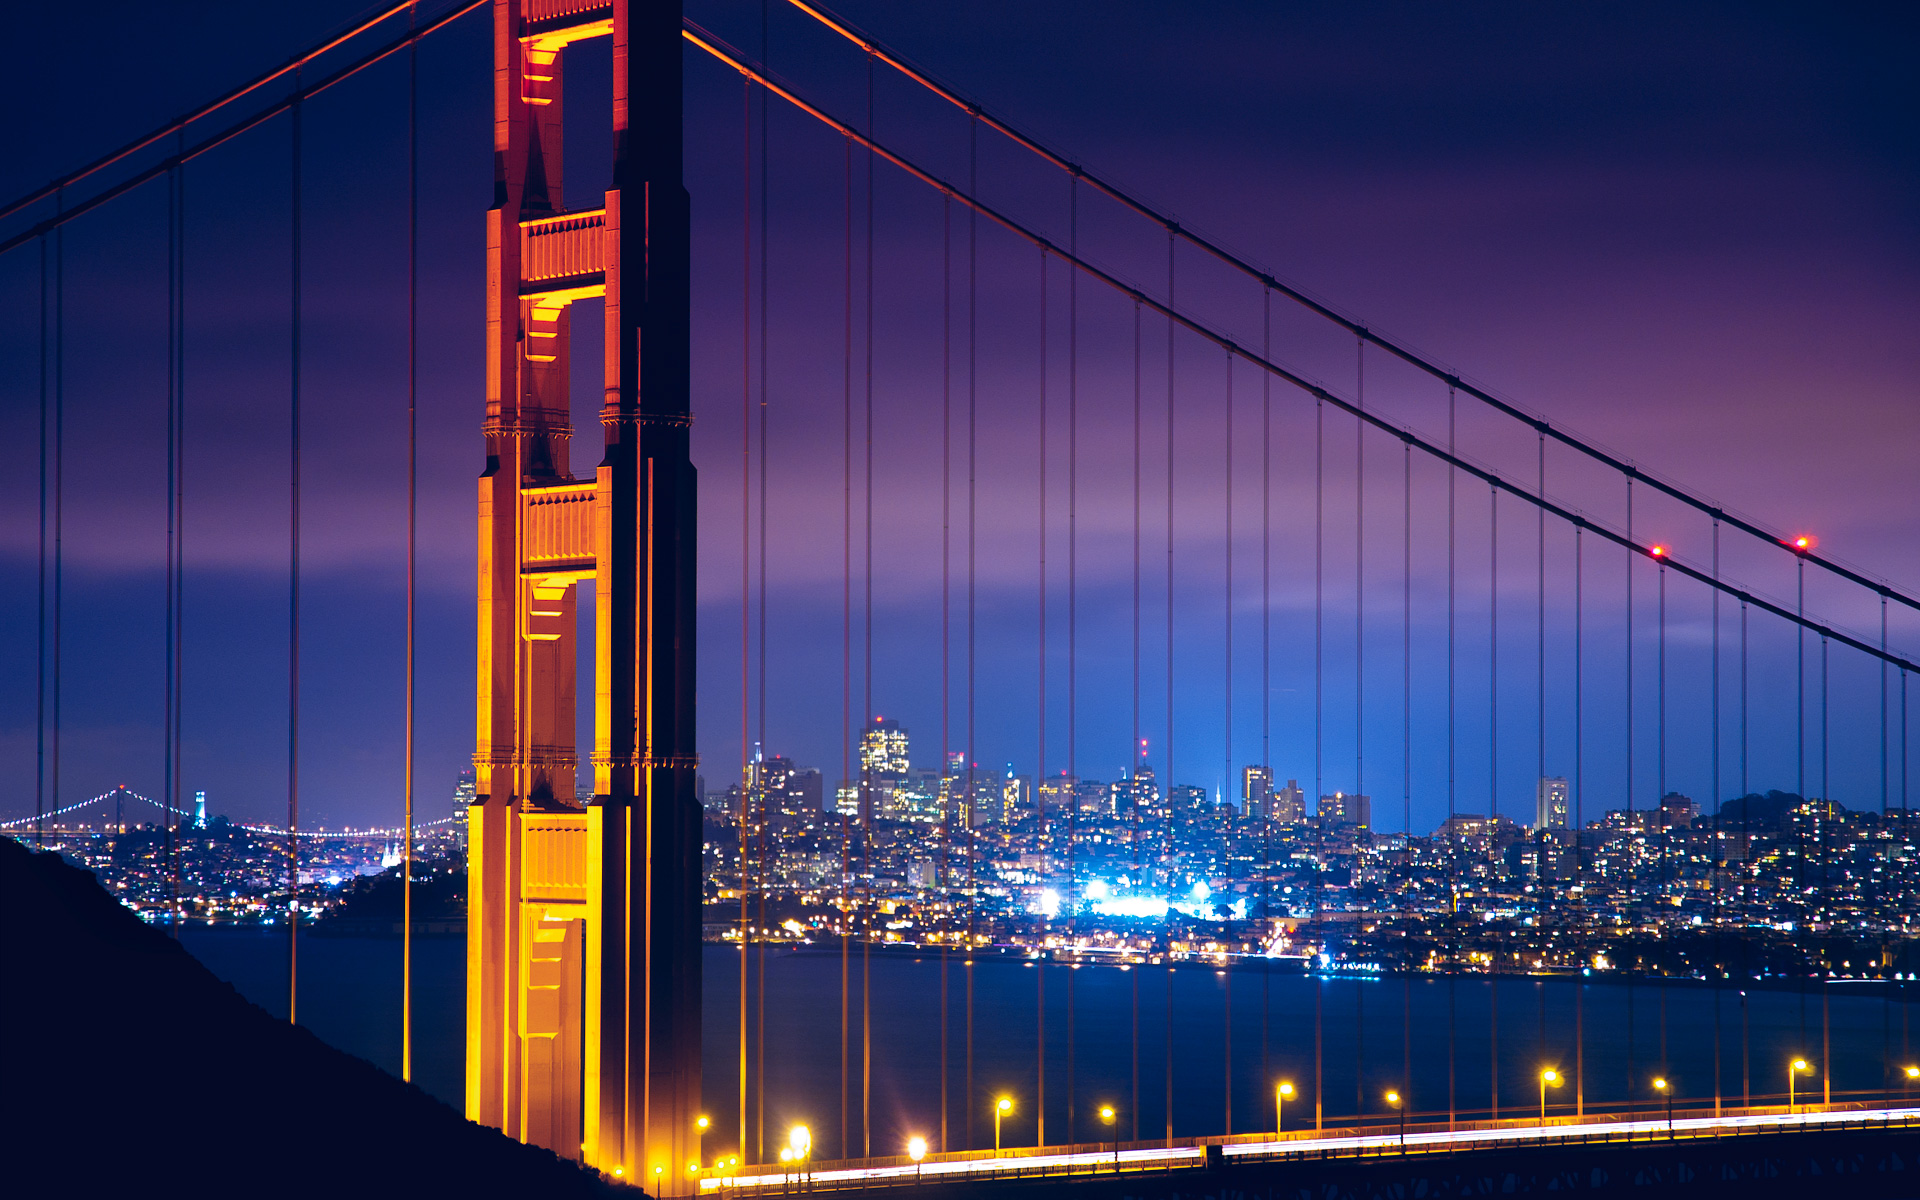 Golden Gate Bridge Photo Wallpaper Gallery